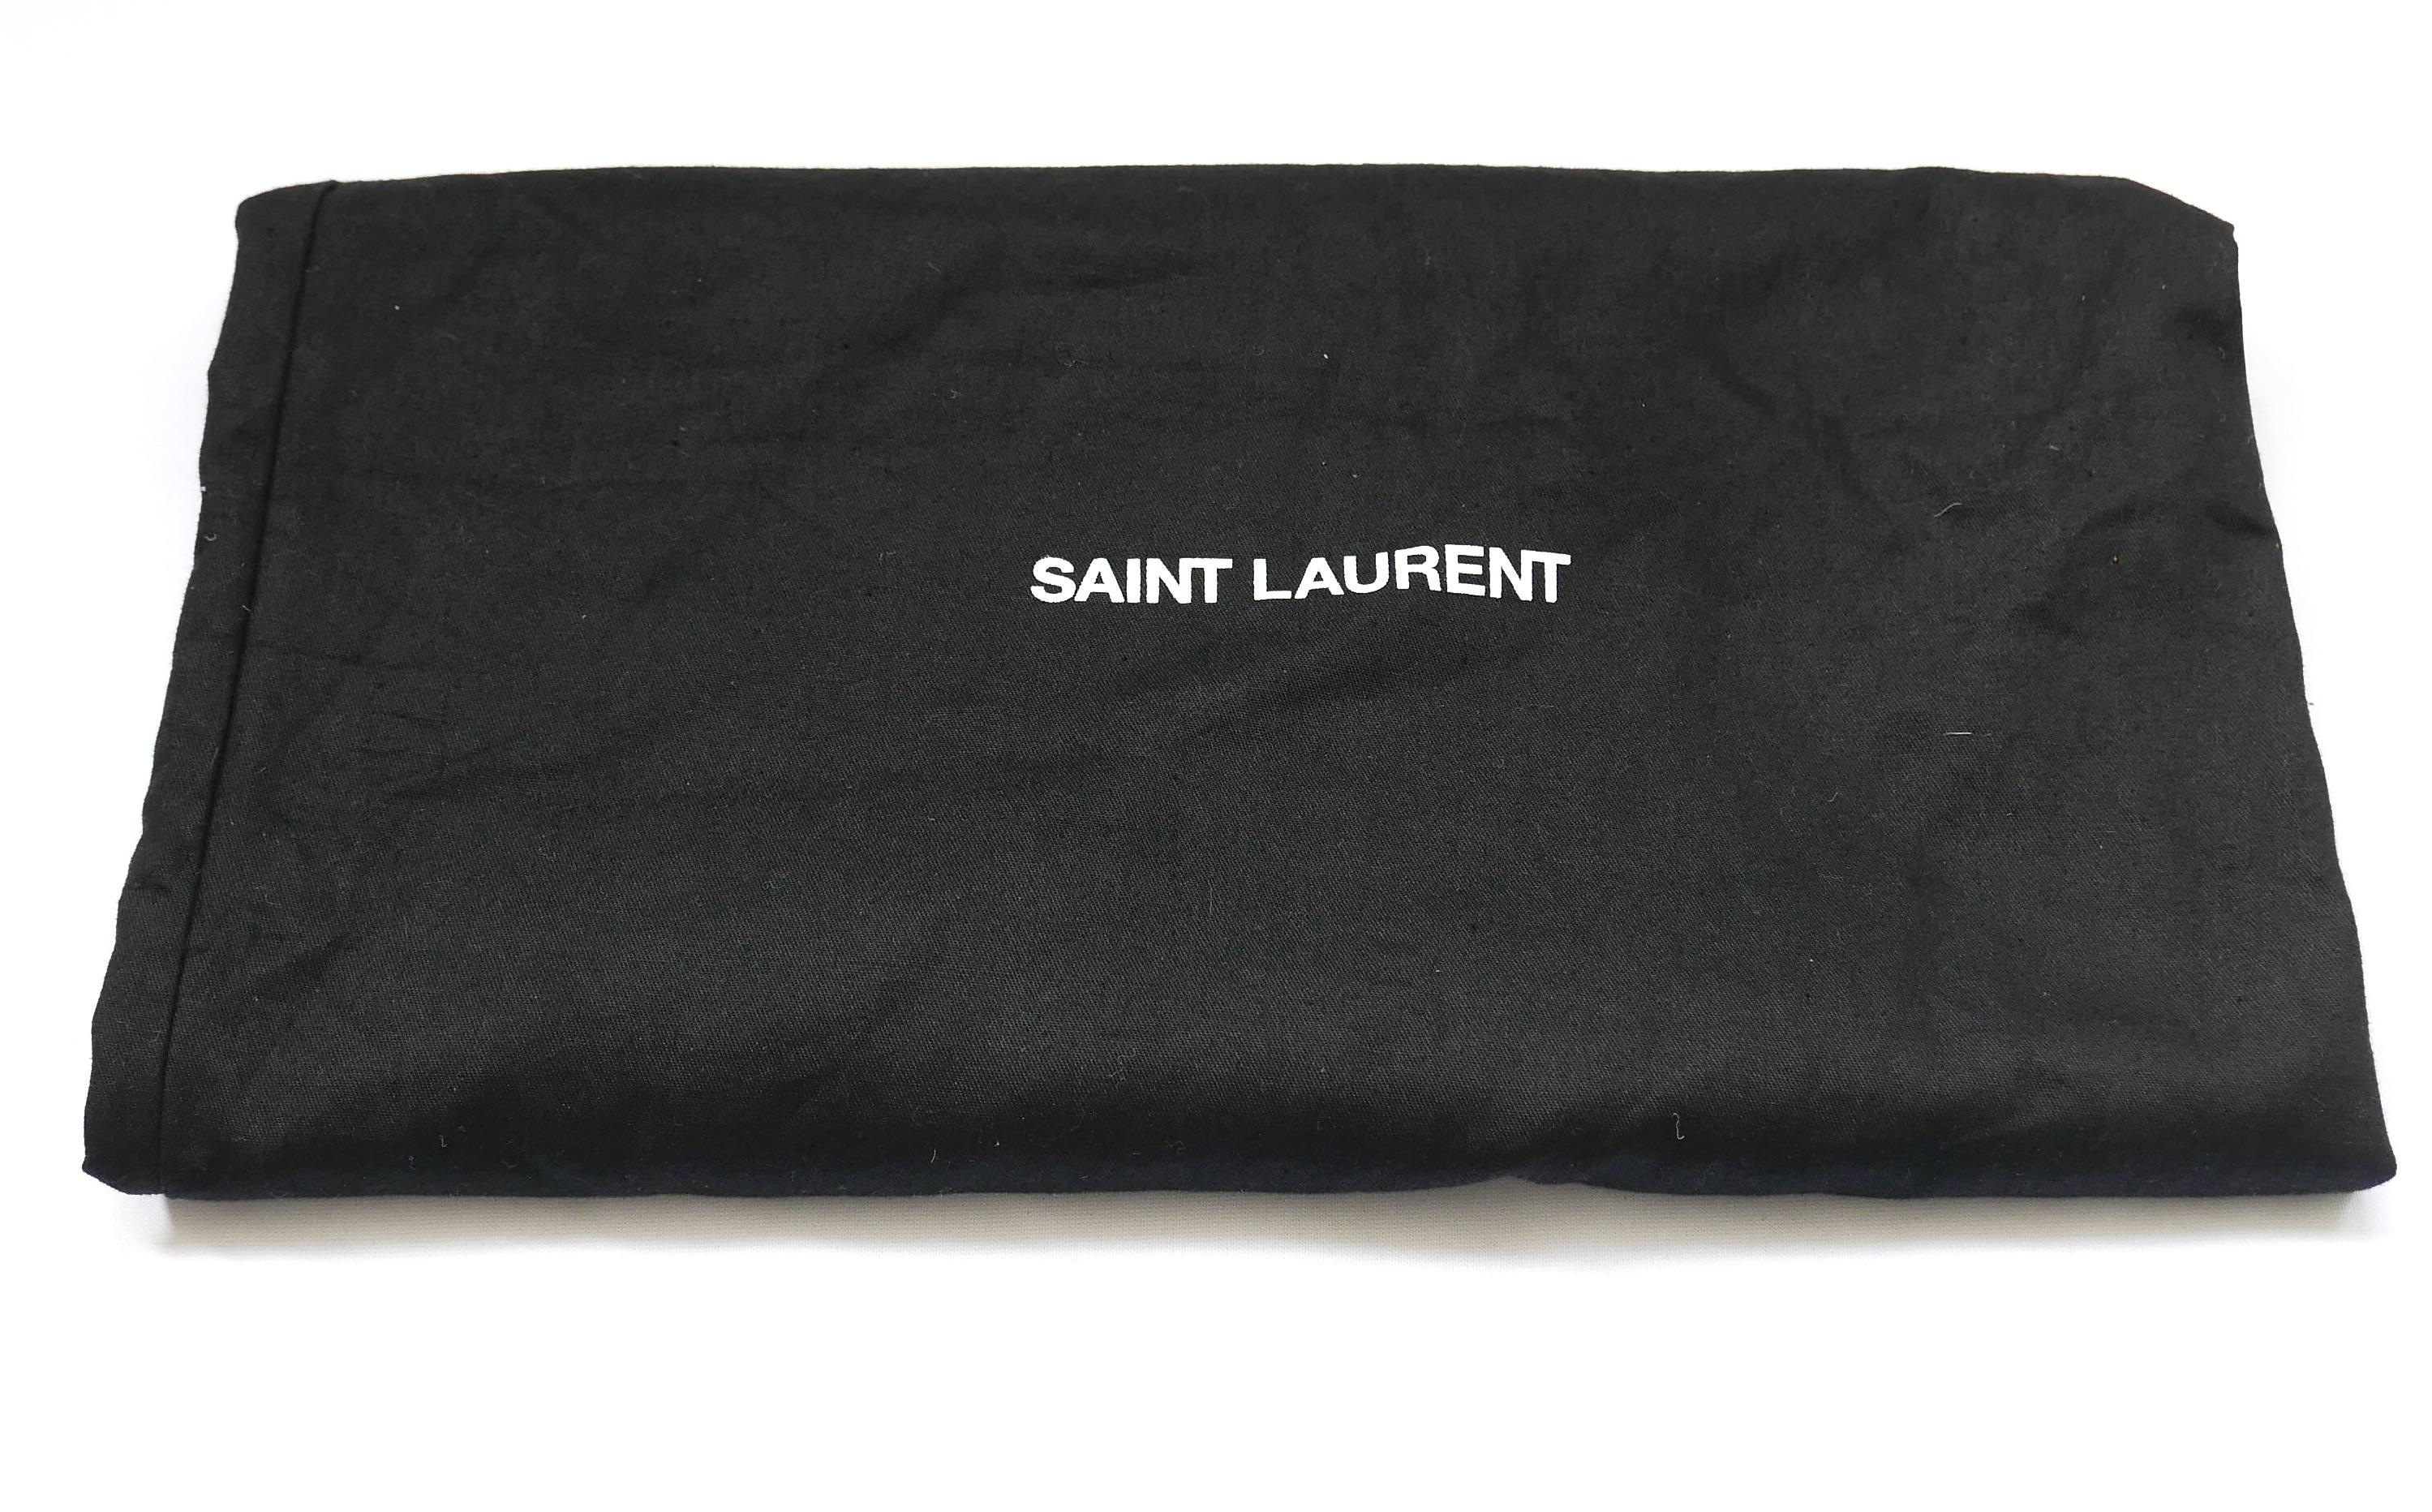 Saint Laurent Freja Rose 105 Heels Fall 2017 For Sale 6